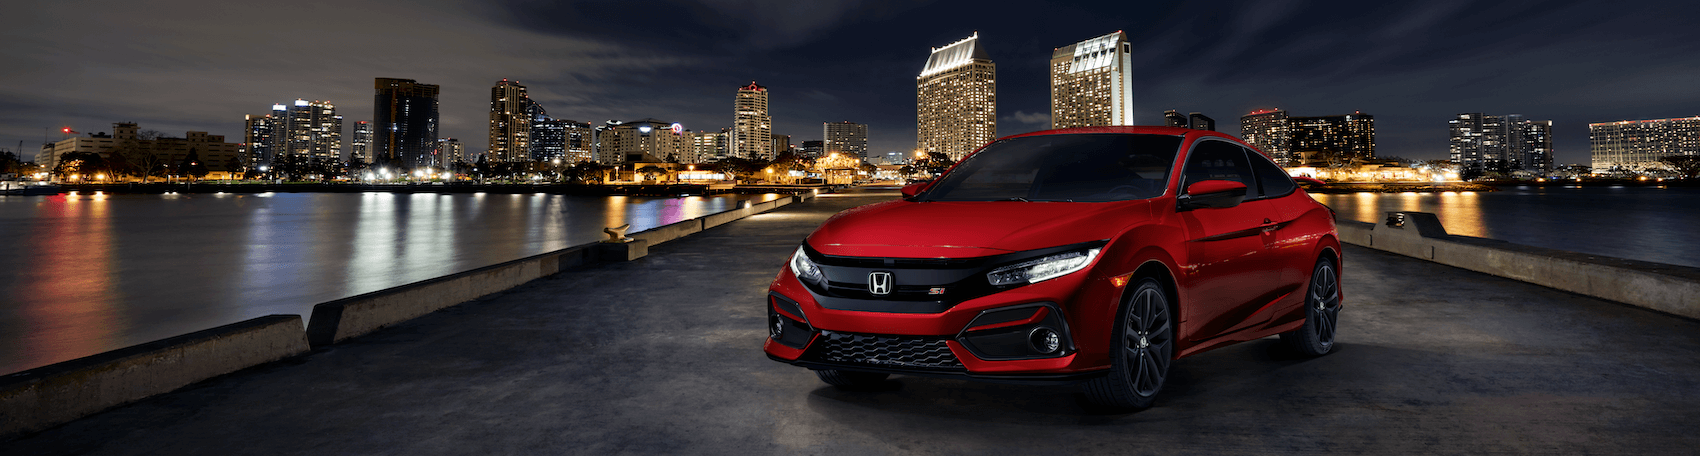 Honda Civic Reviews